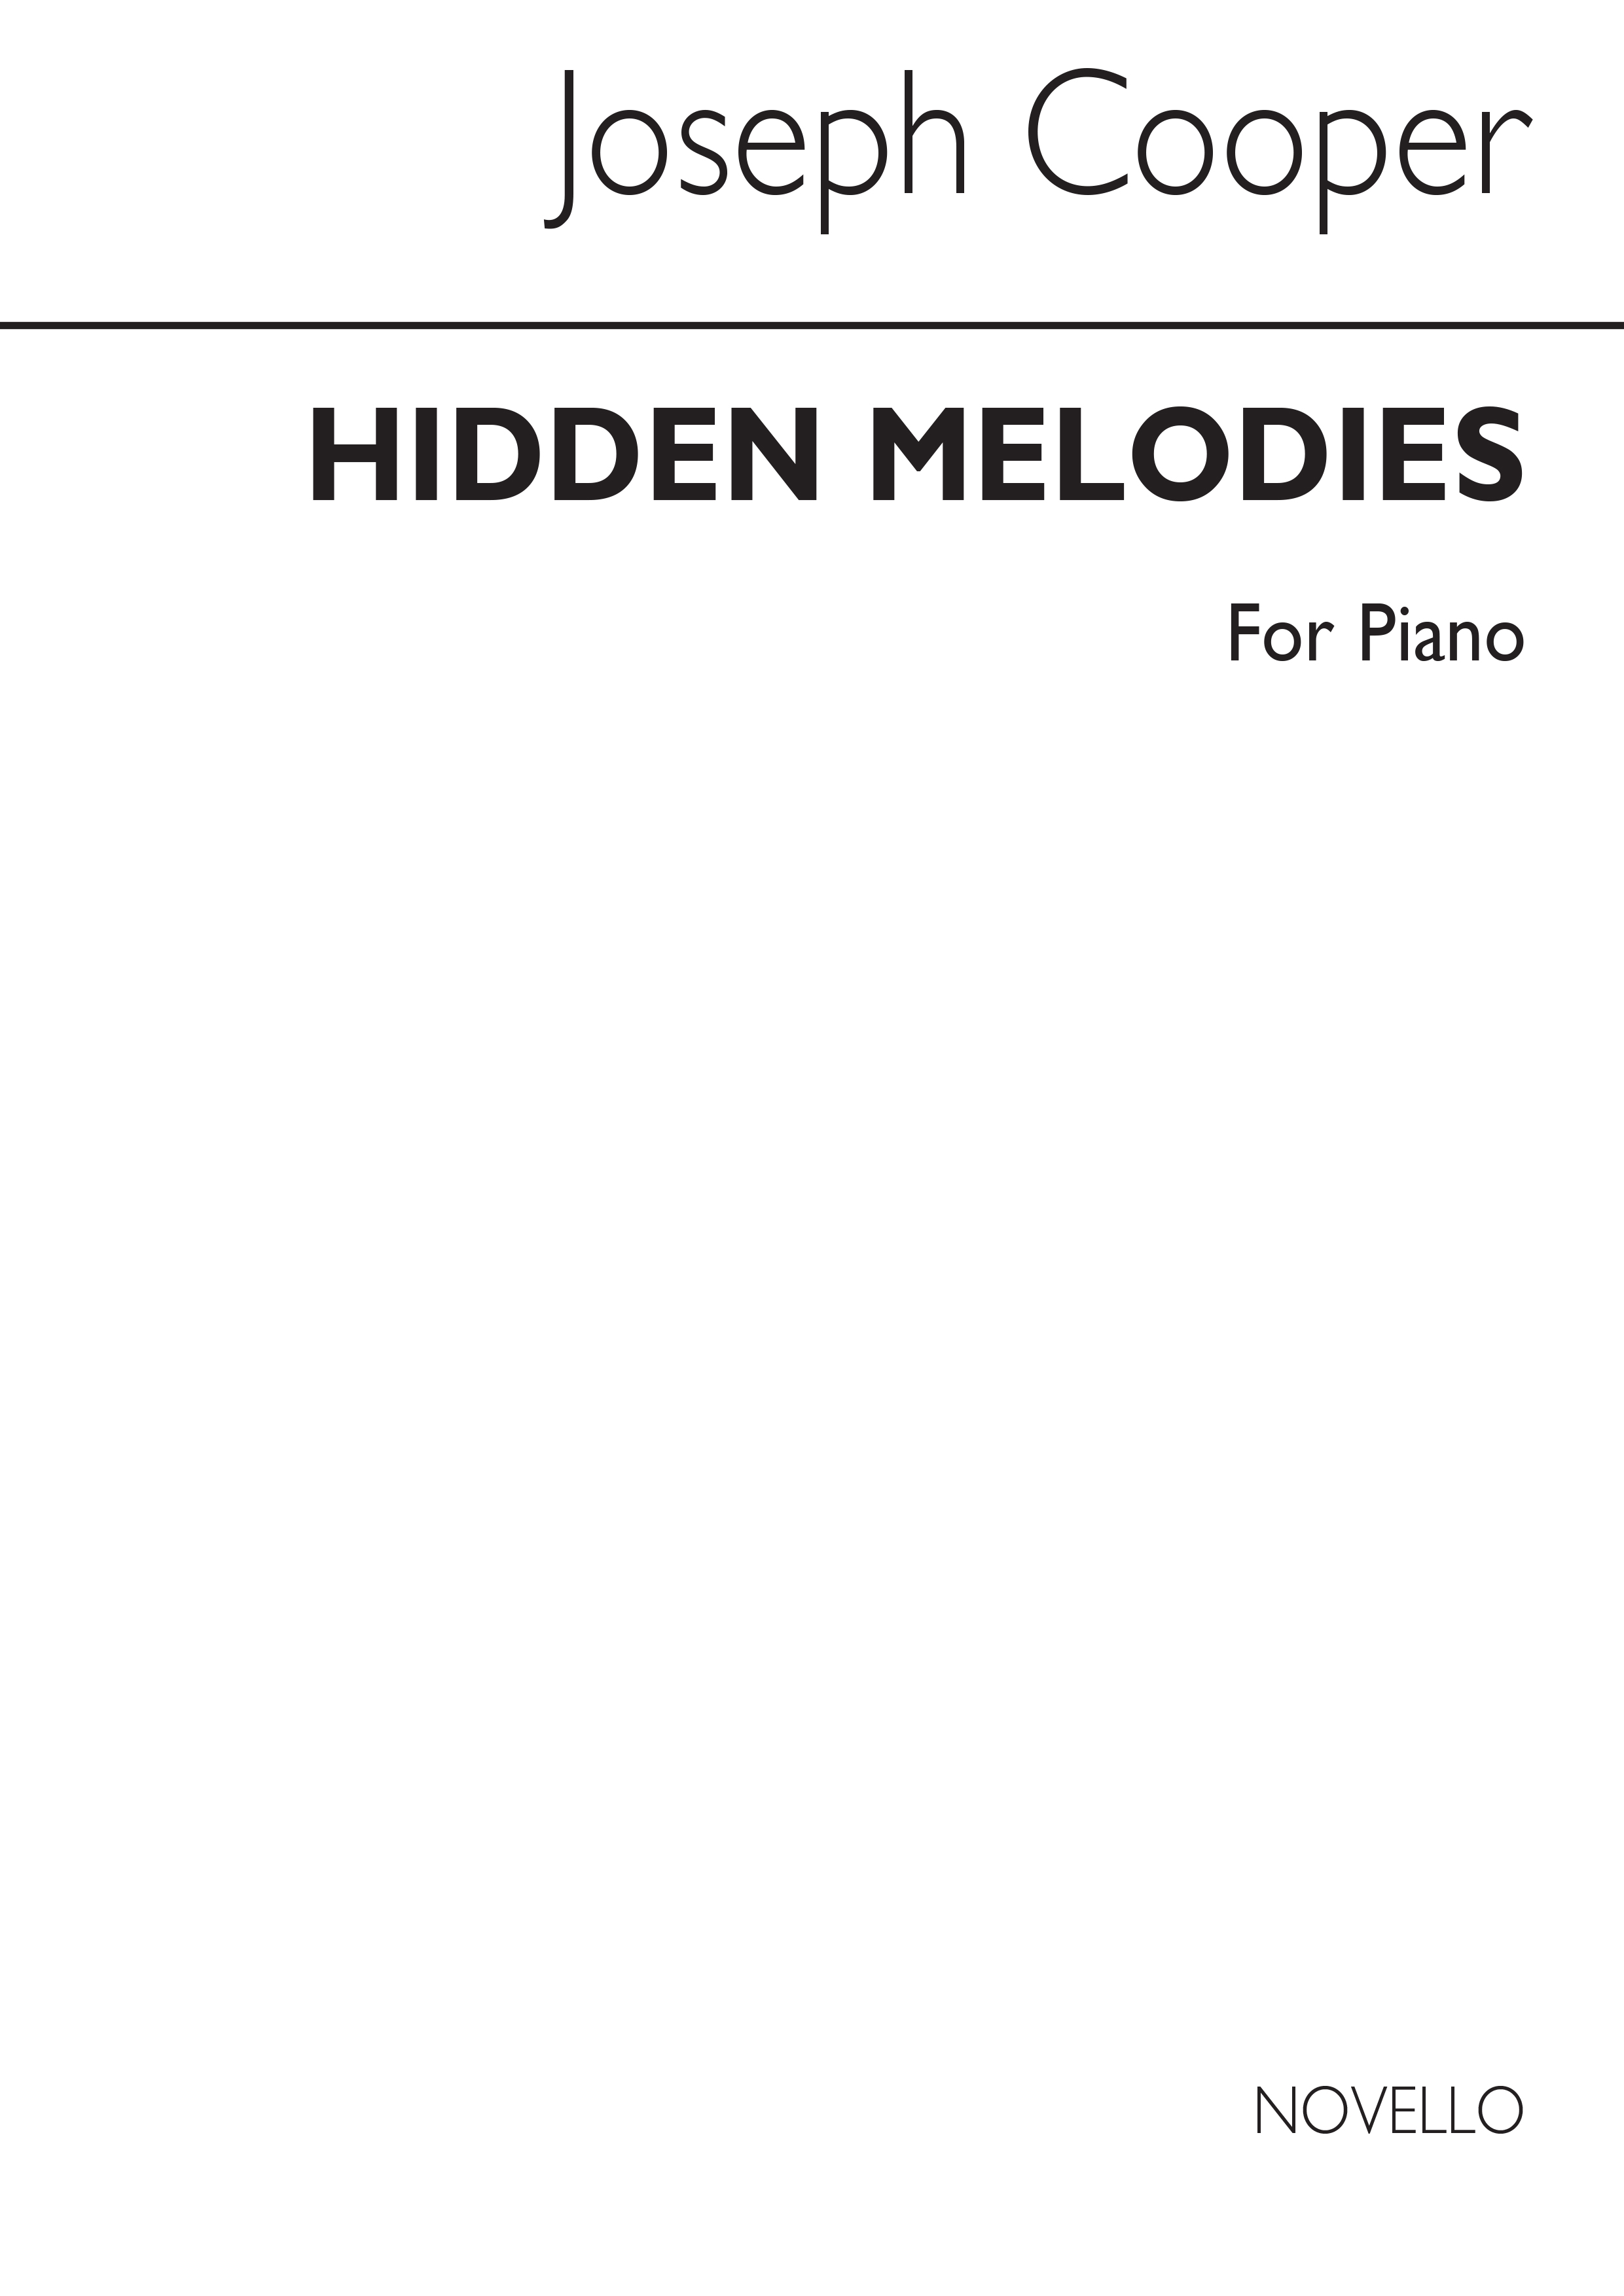 Cooper: Hidden Melodies for Piano